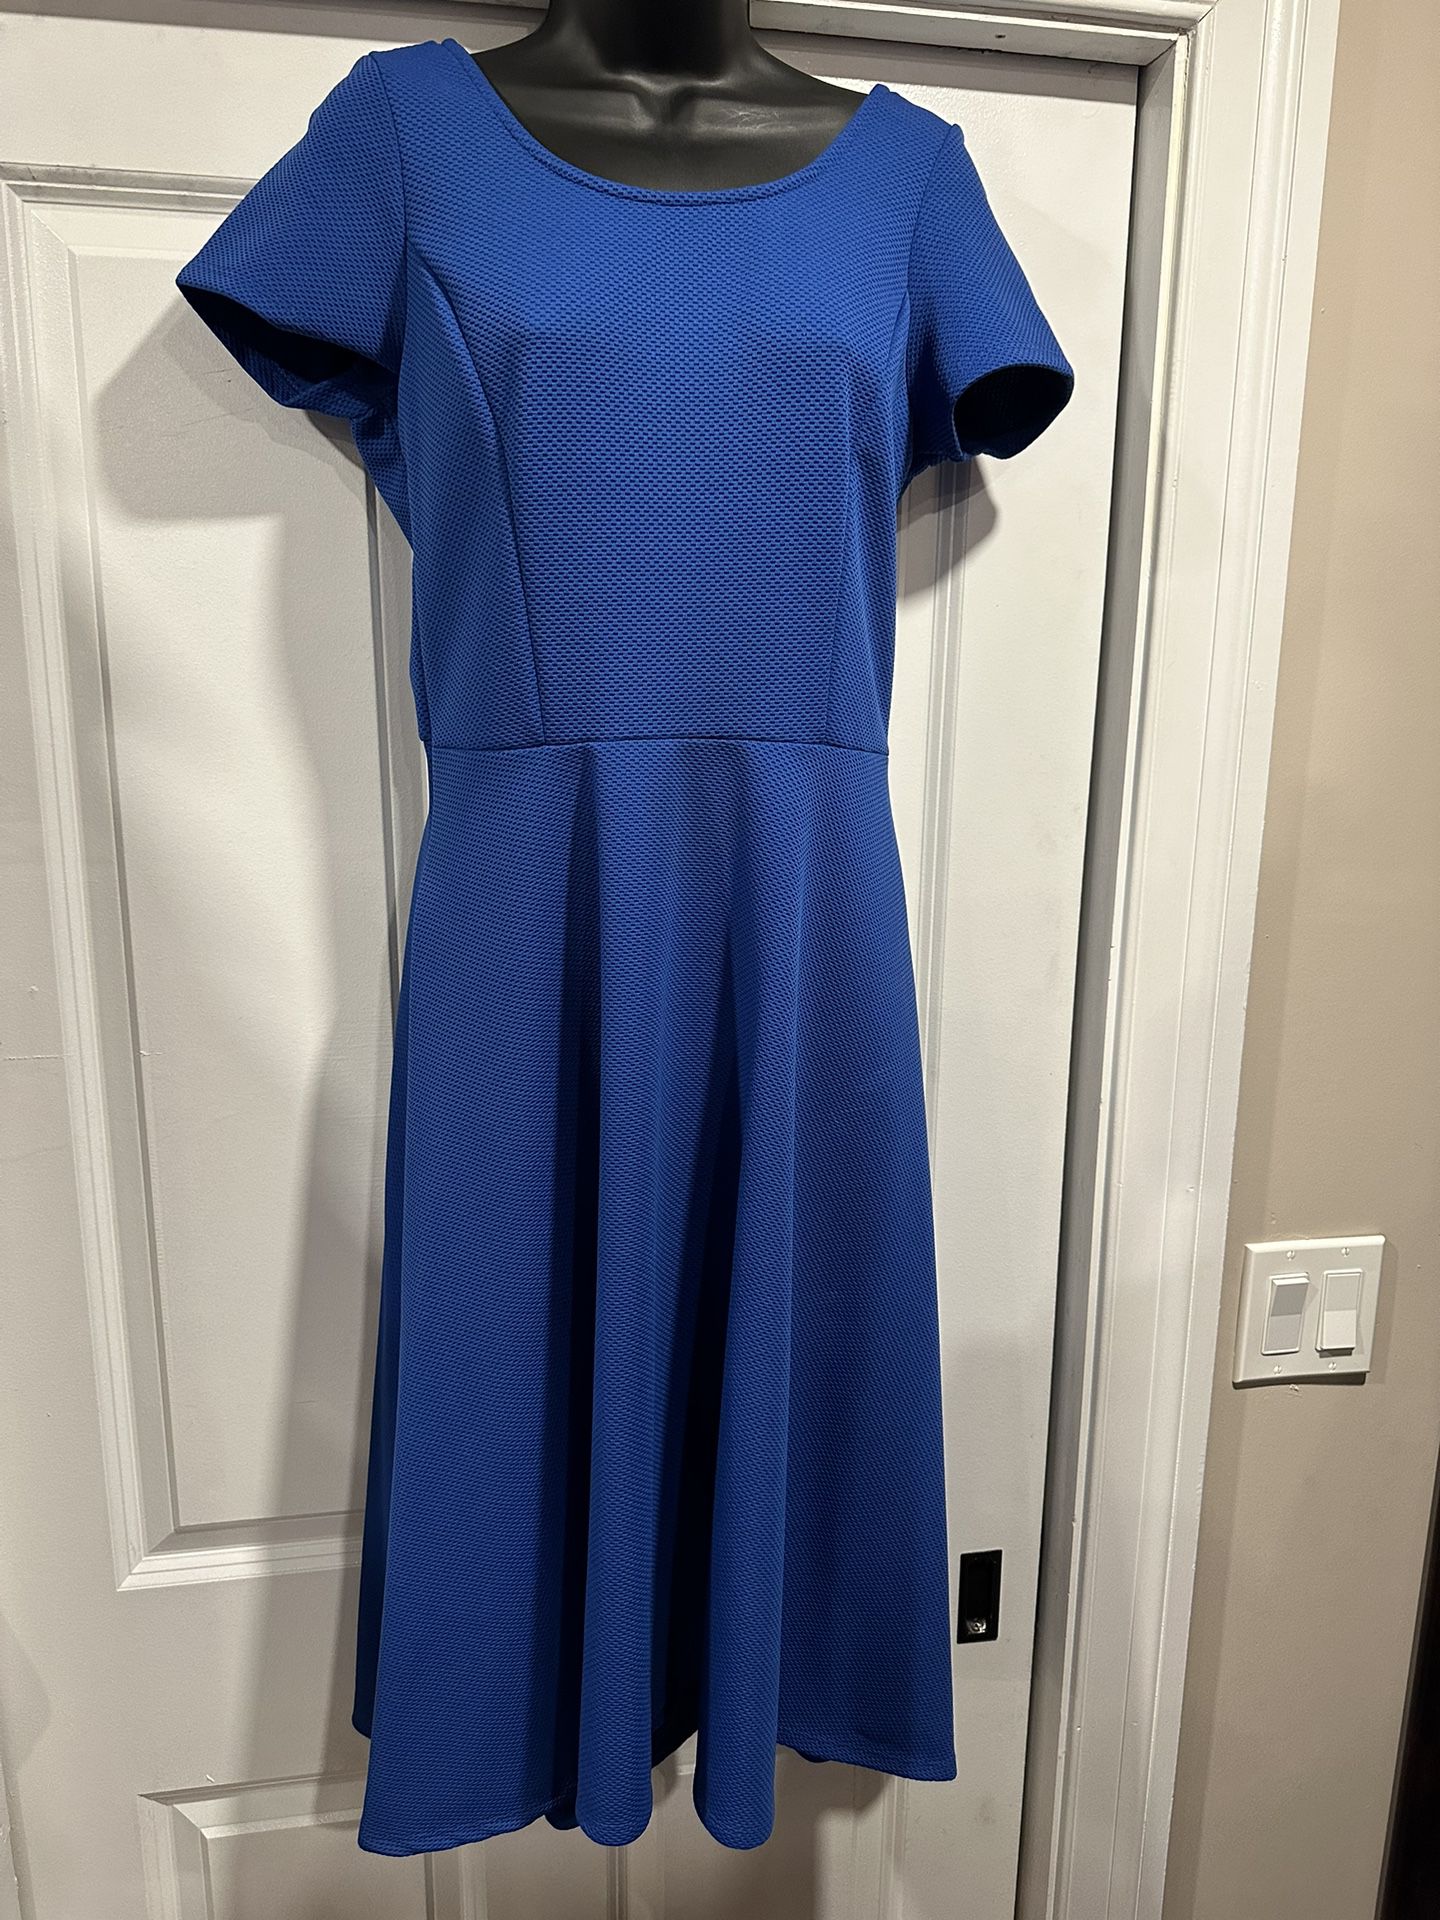 Elegant High-Low Royal Blue Textured Dress